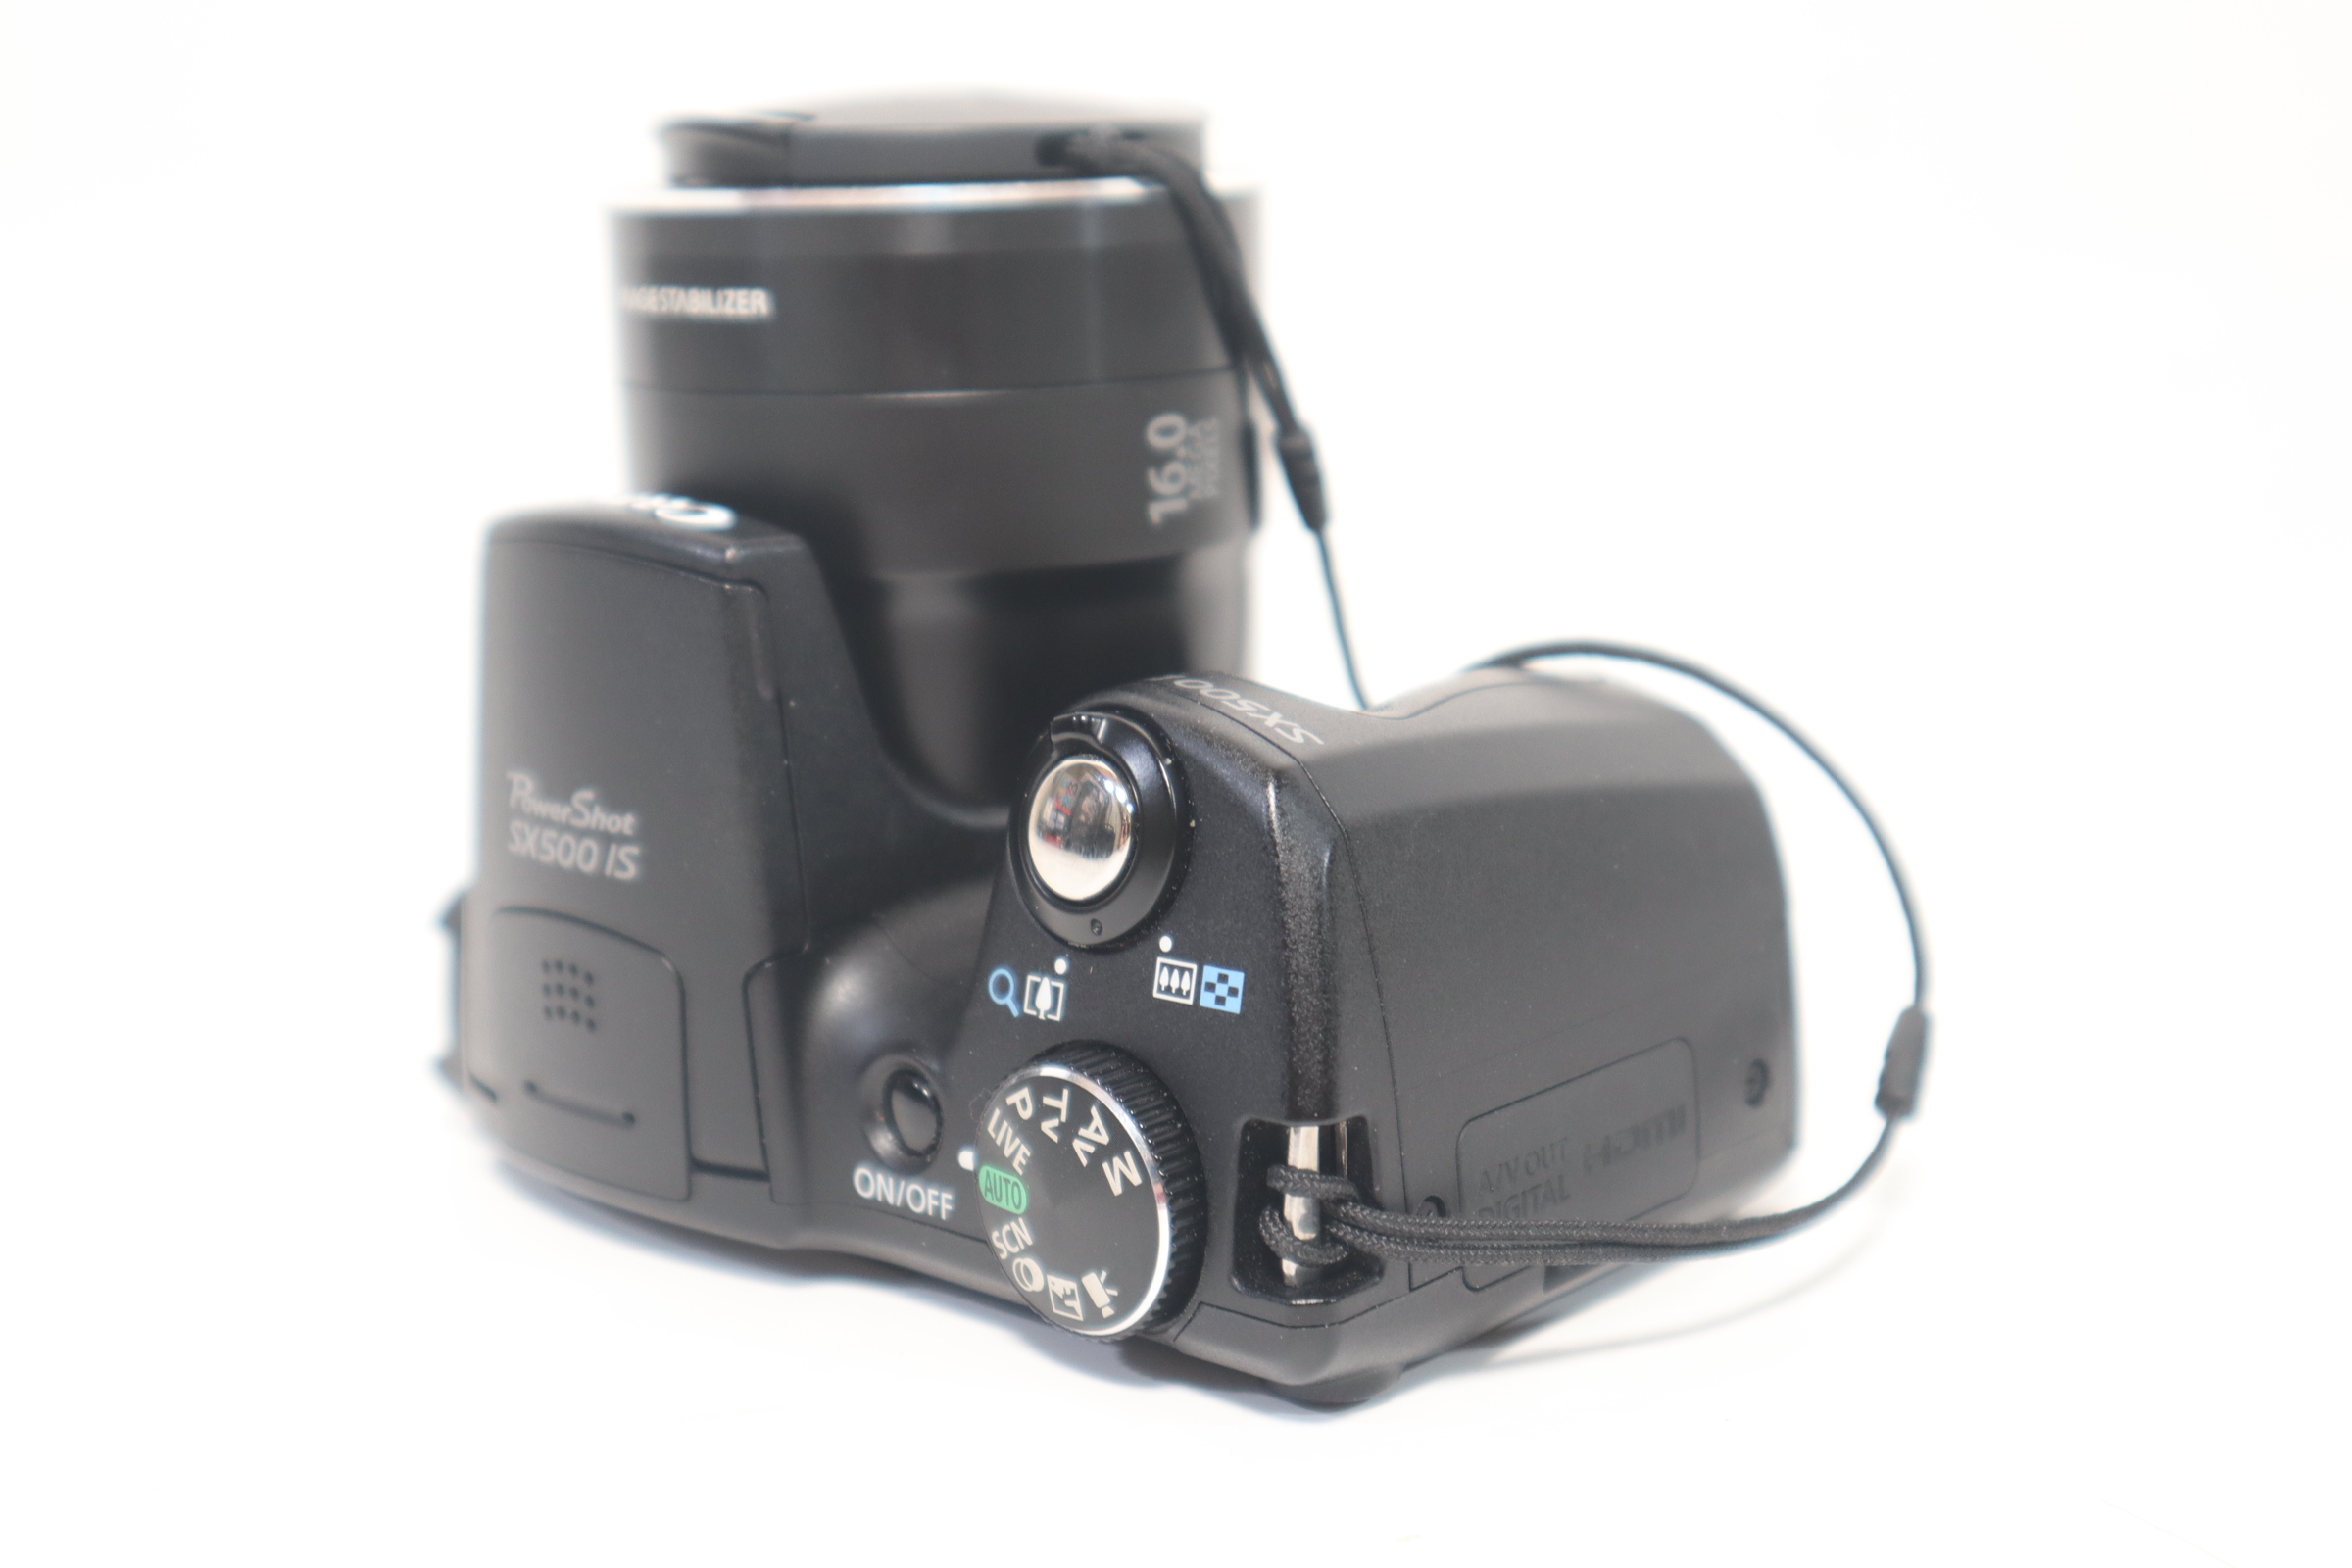 Canon PowerShot SX500 IS Digital Camera - Black (16.0 MP, 30x Optical Zoom)  3.0 inch LCD